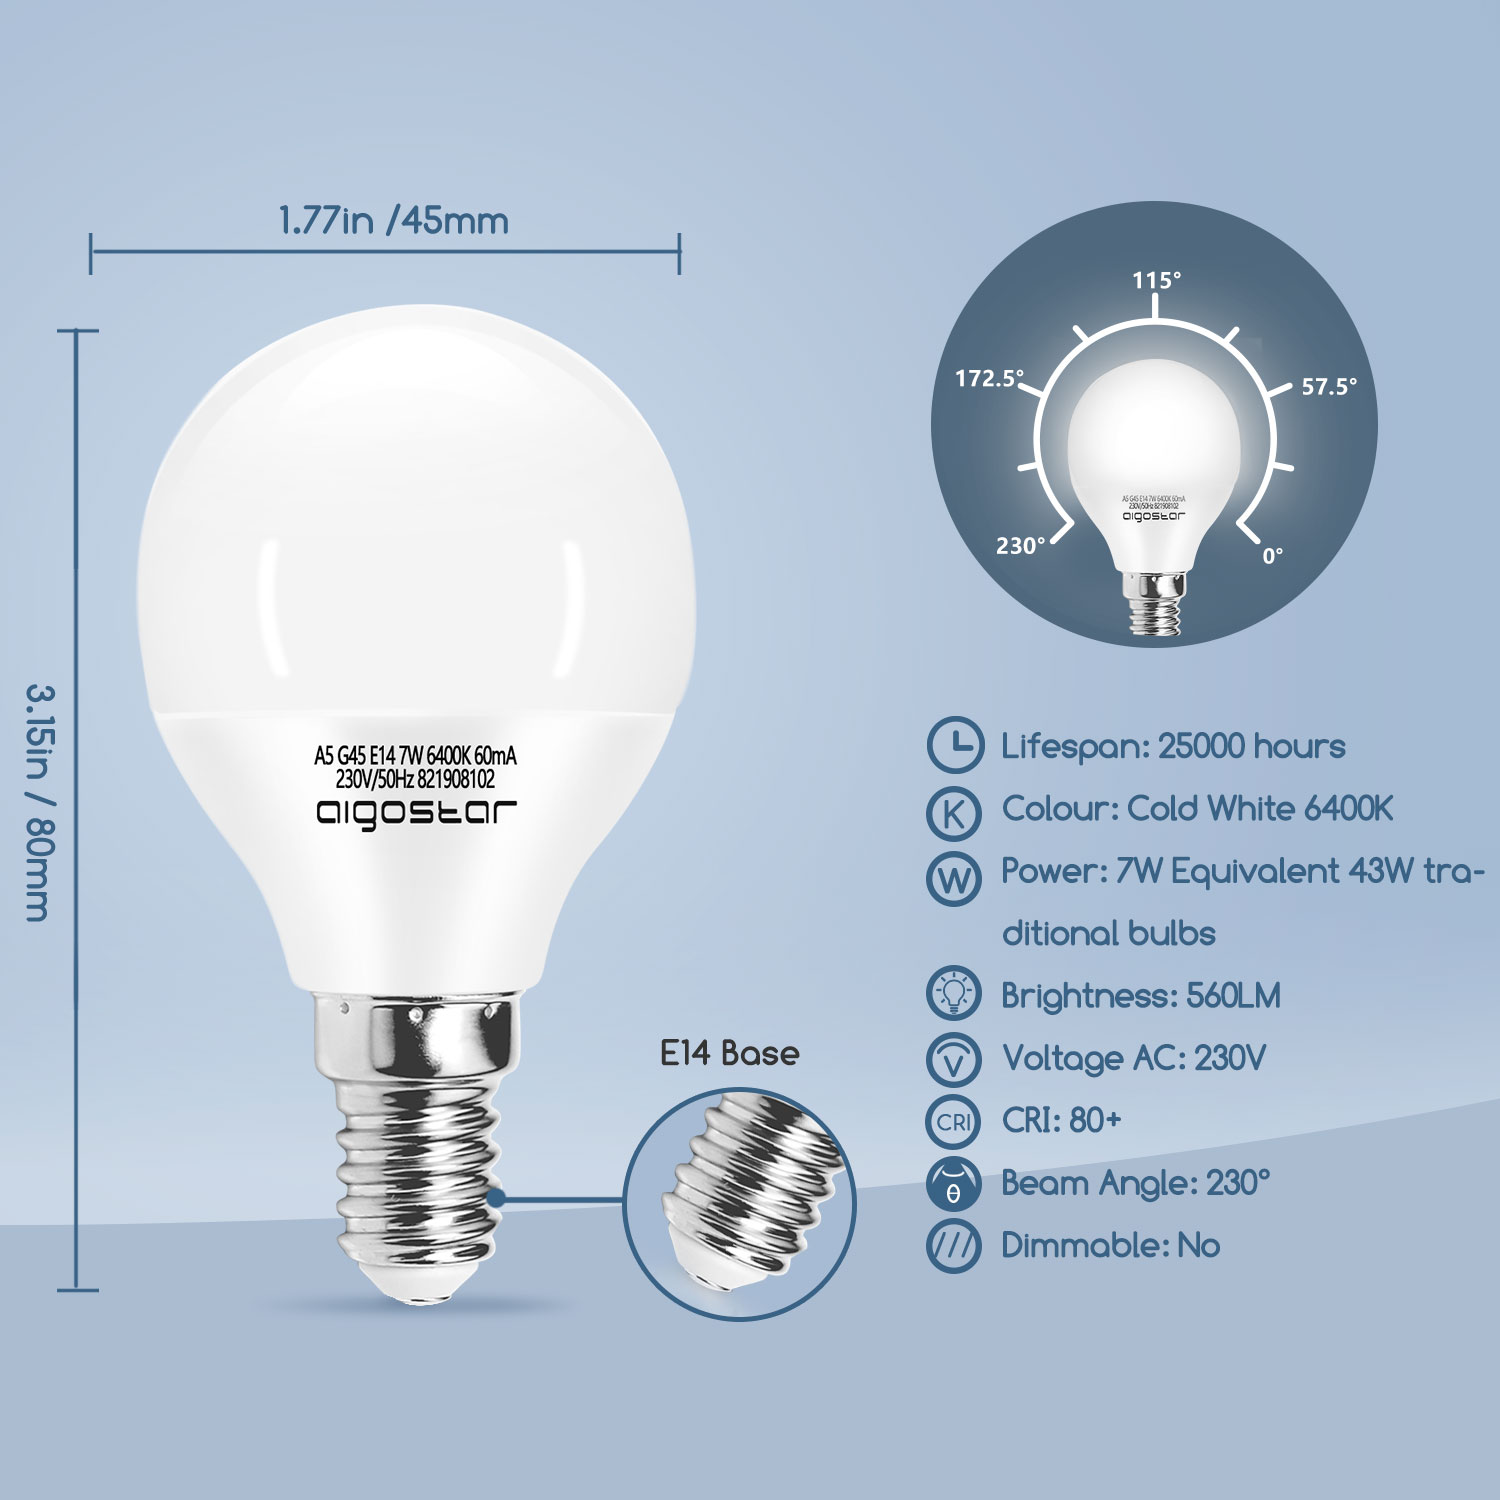 Bombilla crepuscular standard LED E27 10w 800 lm 6400k luz fria